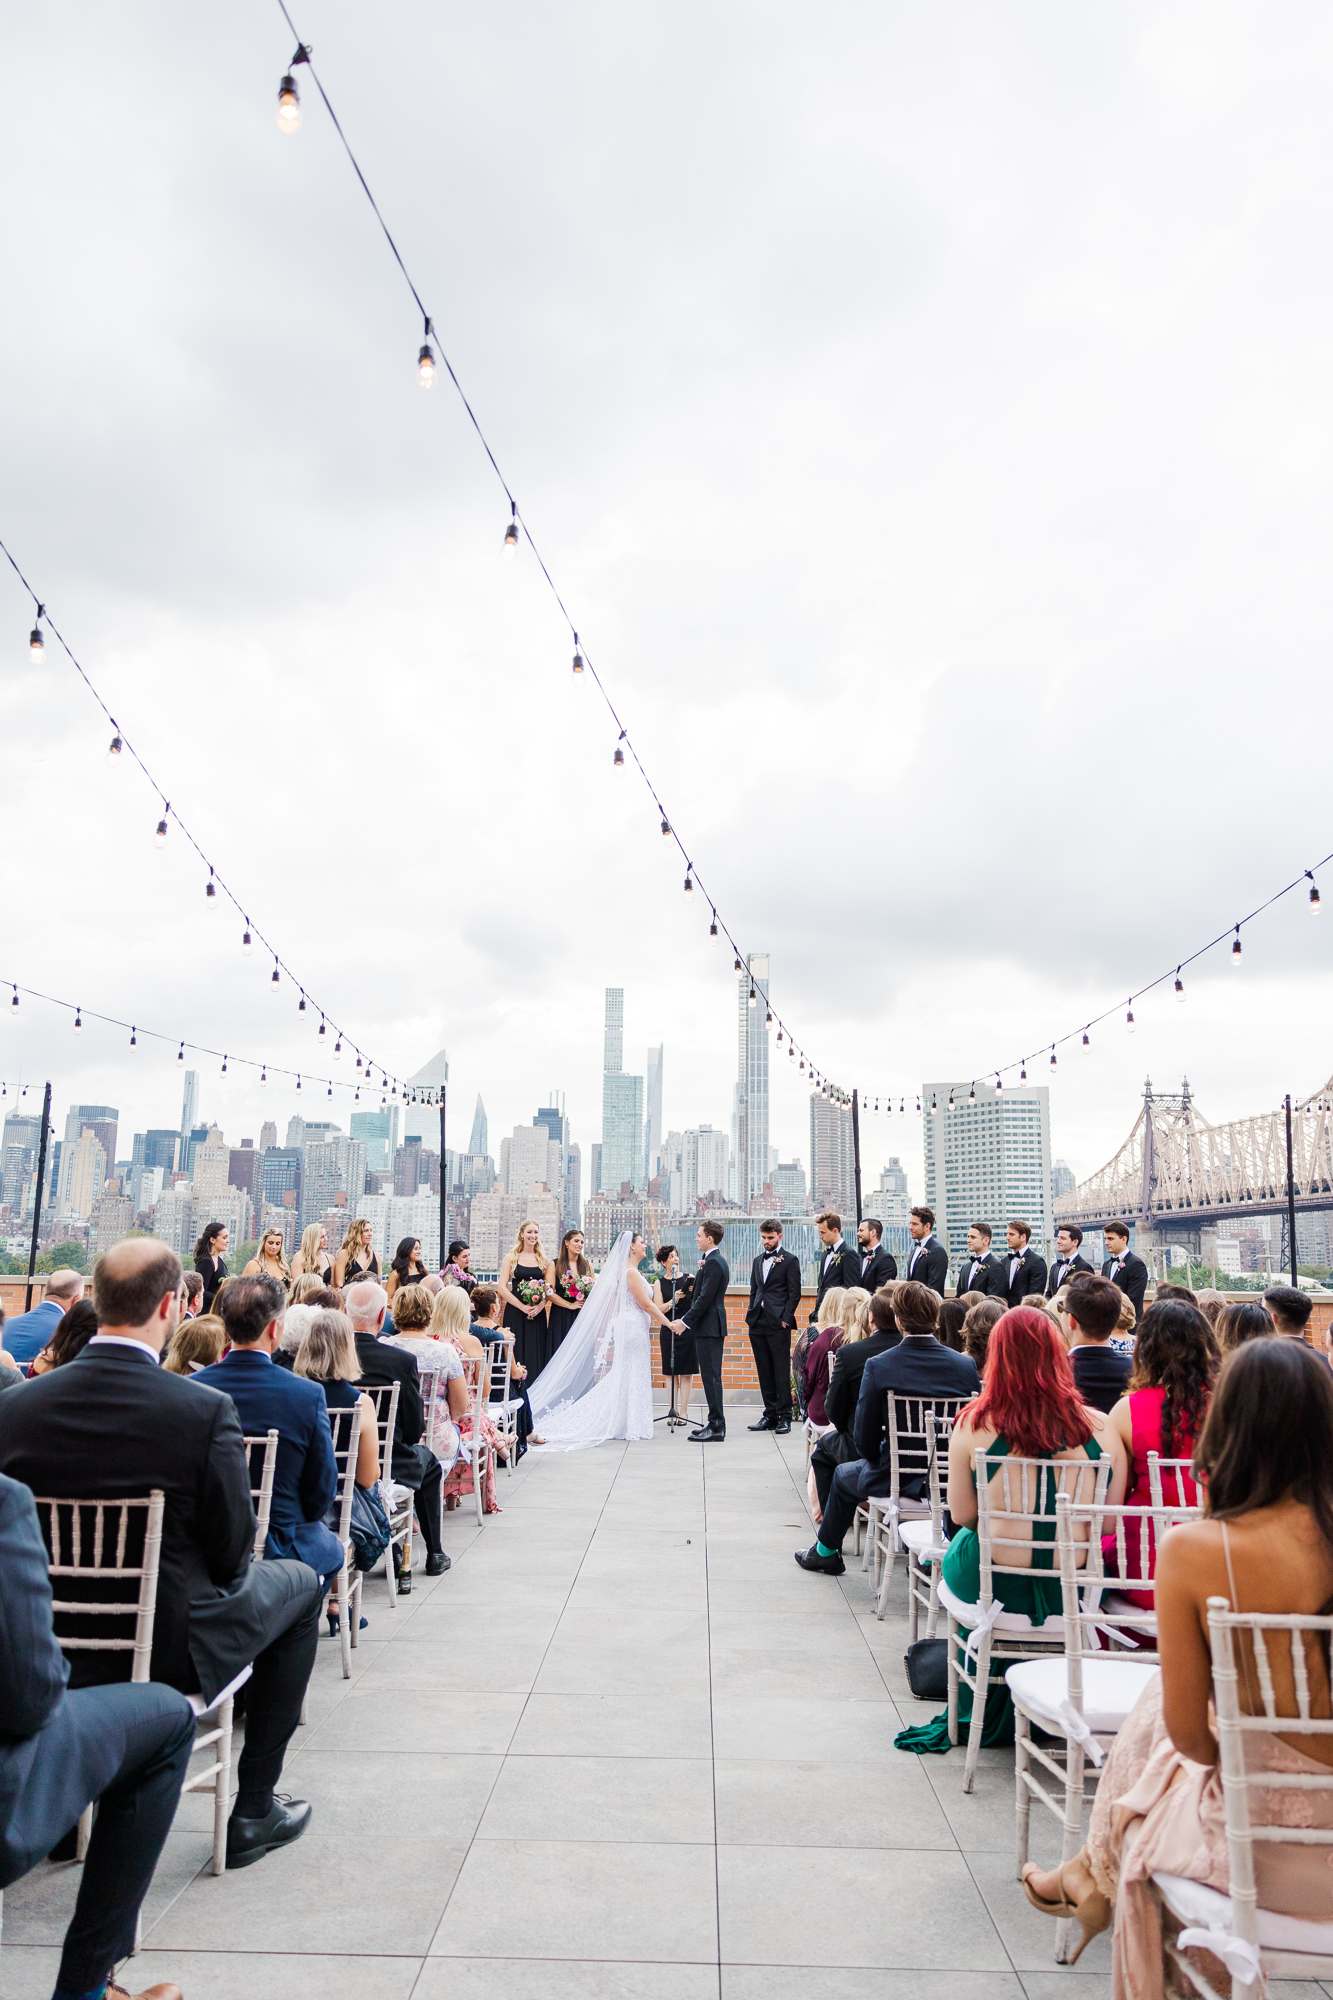 Stunning Long Island City Wedding Photos at The Bordone